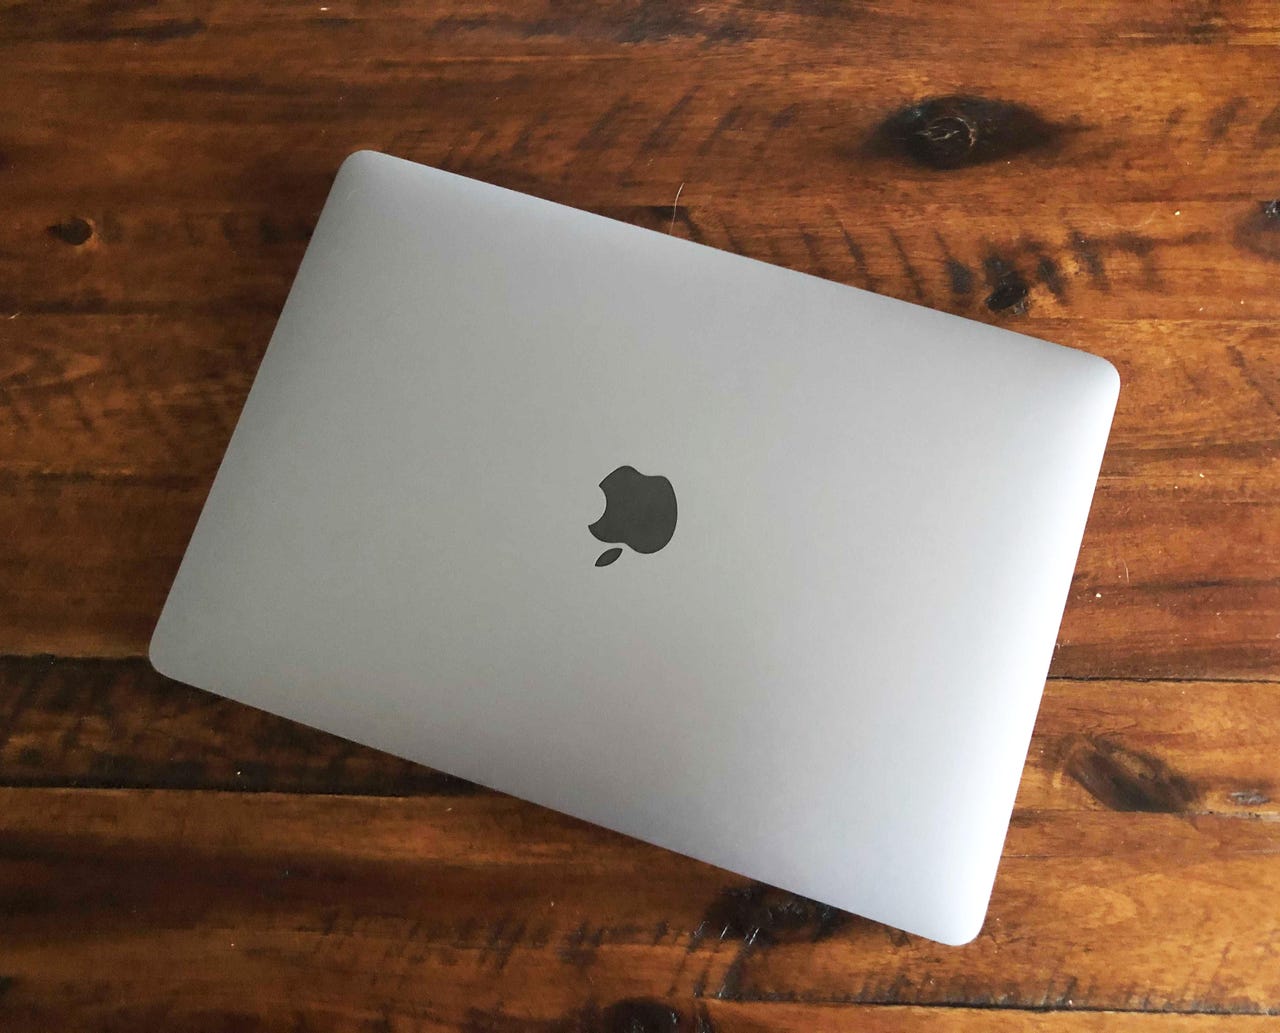 M1 MacBook Air review: Impressive, but doesn't beat my Intel MacBook Pro